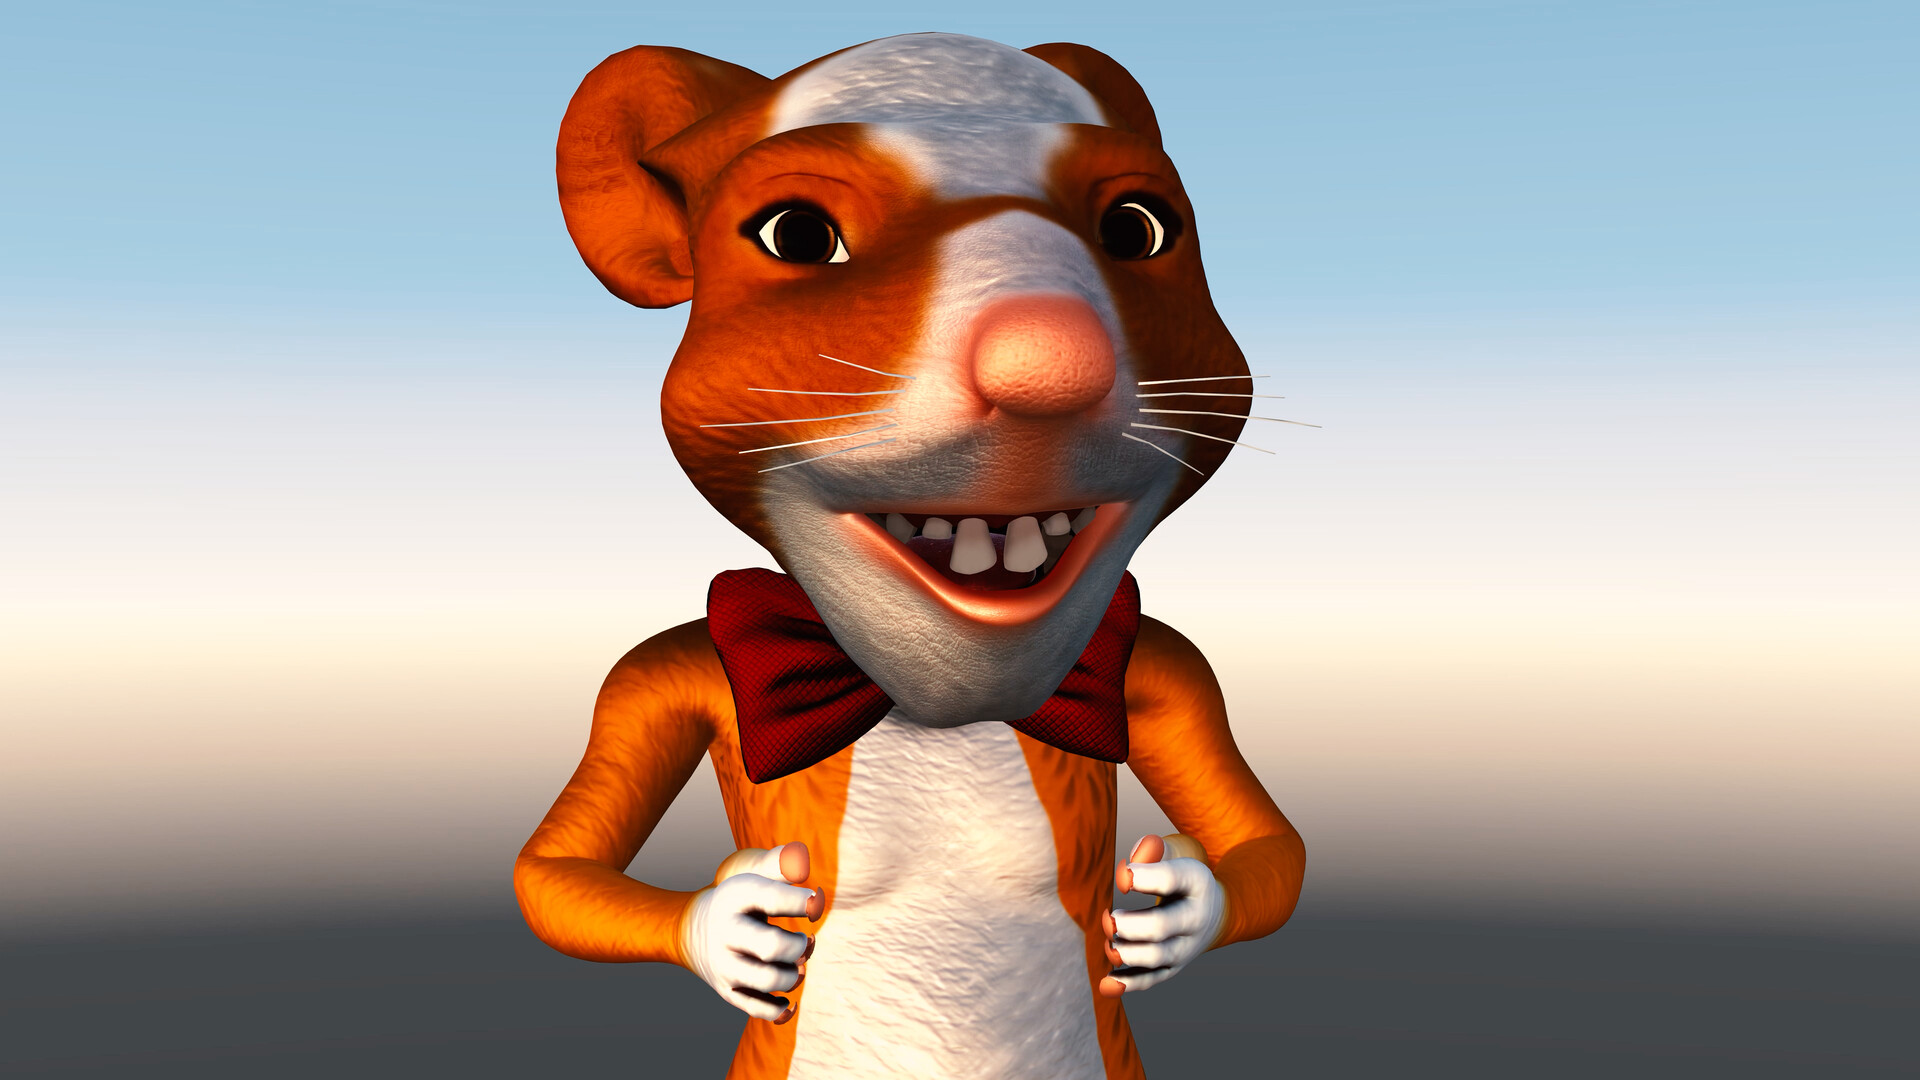 ArtStation - 3d Cartoon Hamster Business Mascot